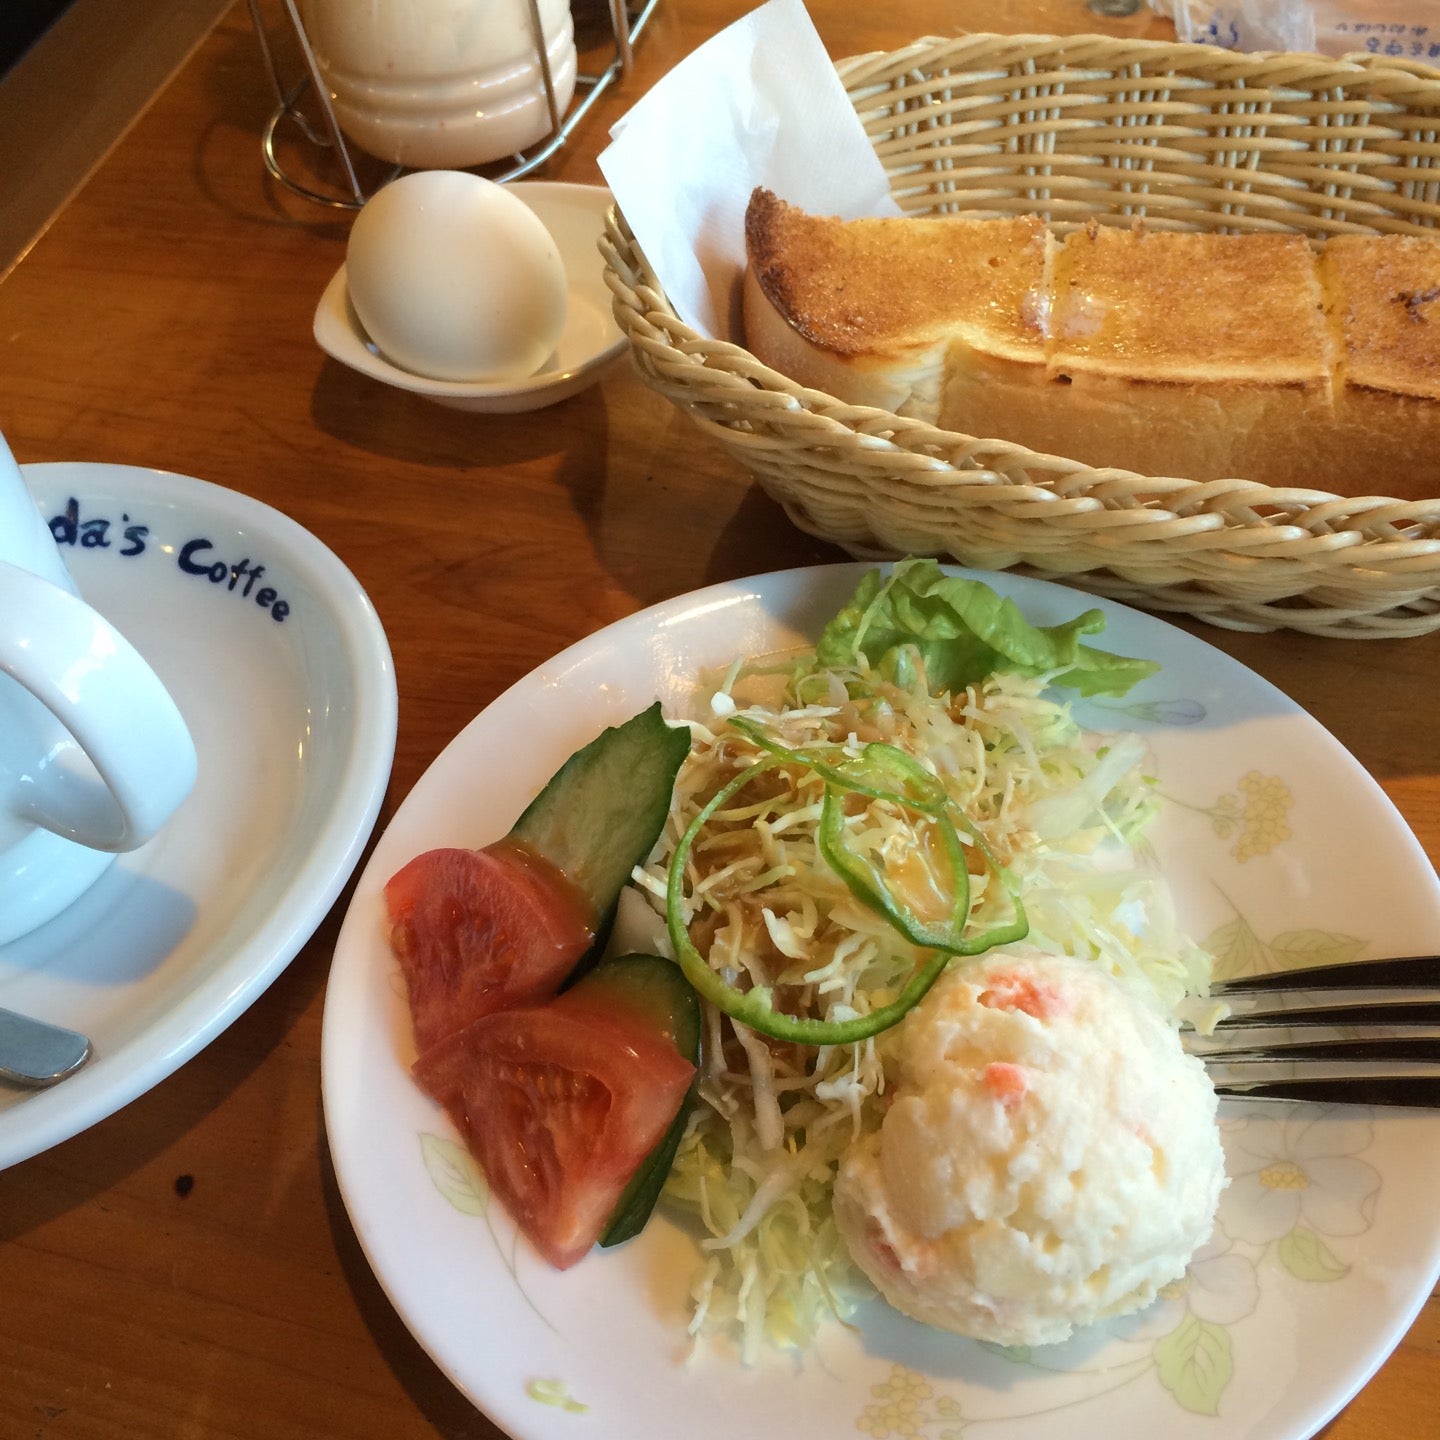 Komeda's Coffee (コメダ珈琲店)